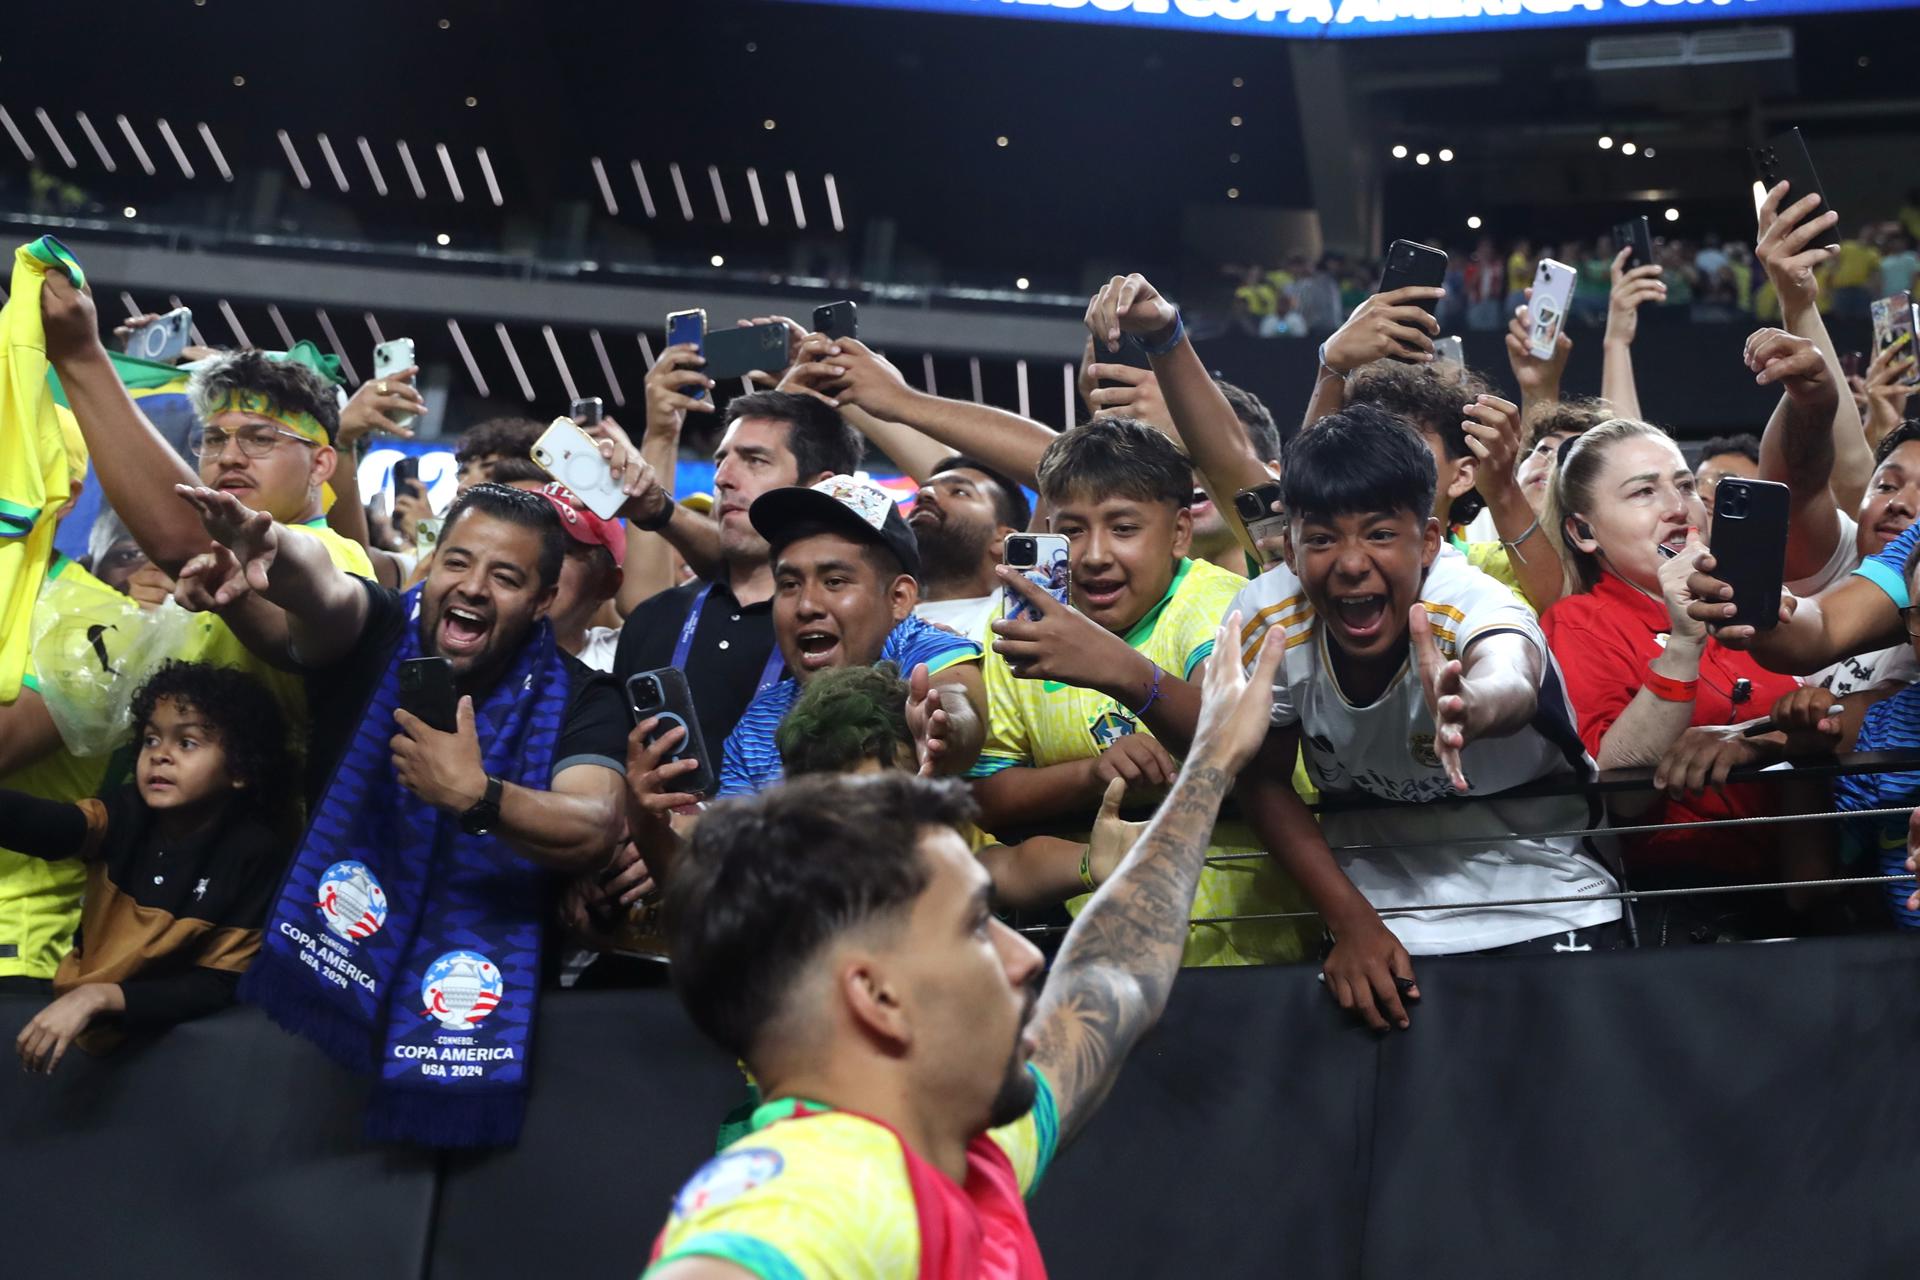 rss-efea3c242f86e31dab320989cc26266e891eef37bdew La Copa América supera el millón de espectadores en la grada en plena fase de grupos